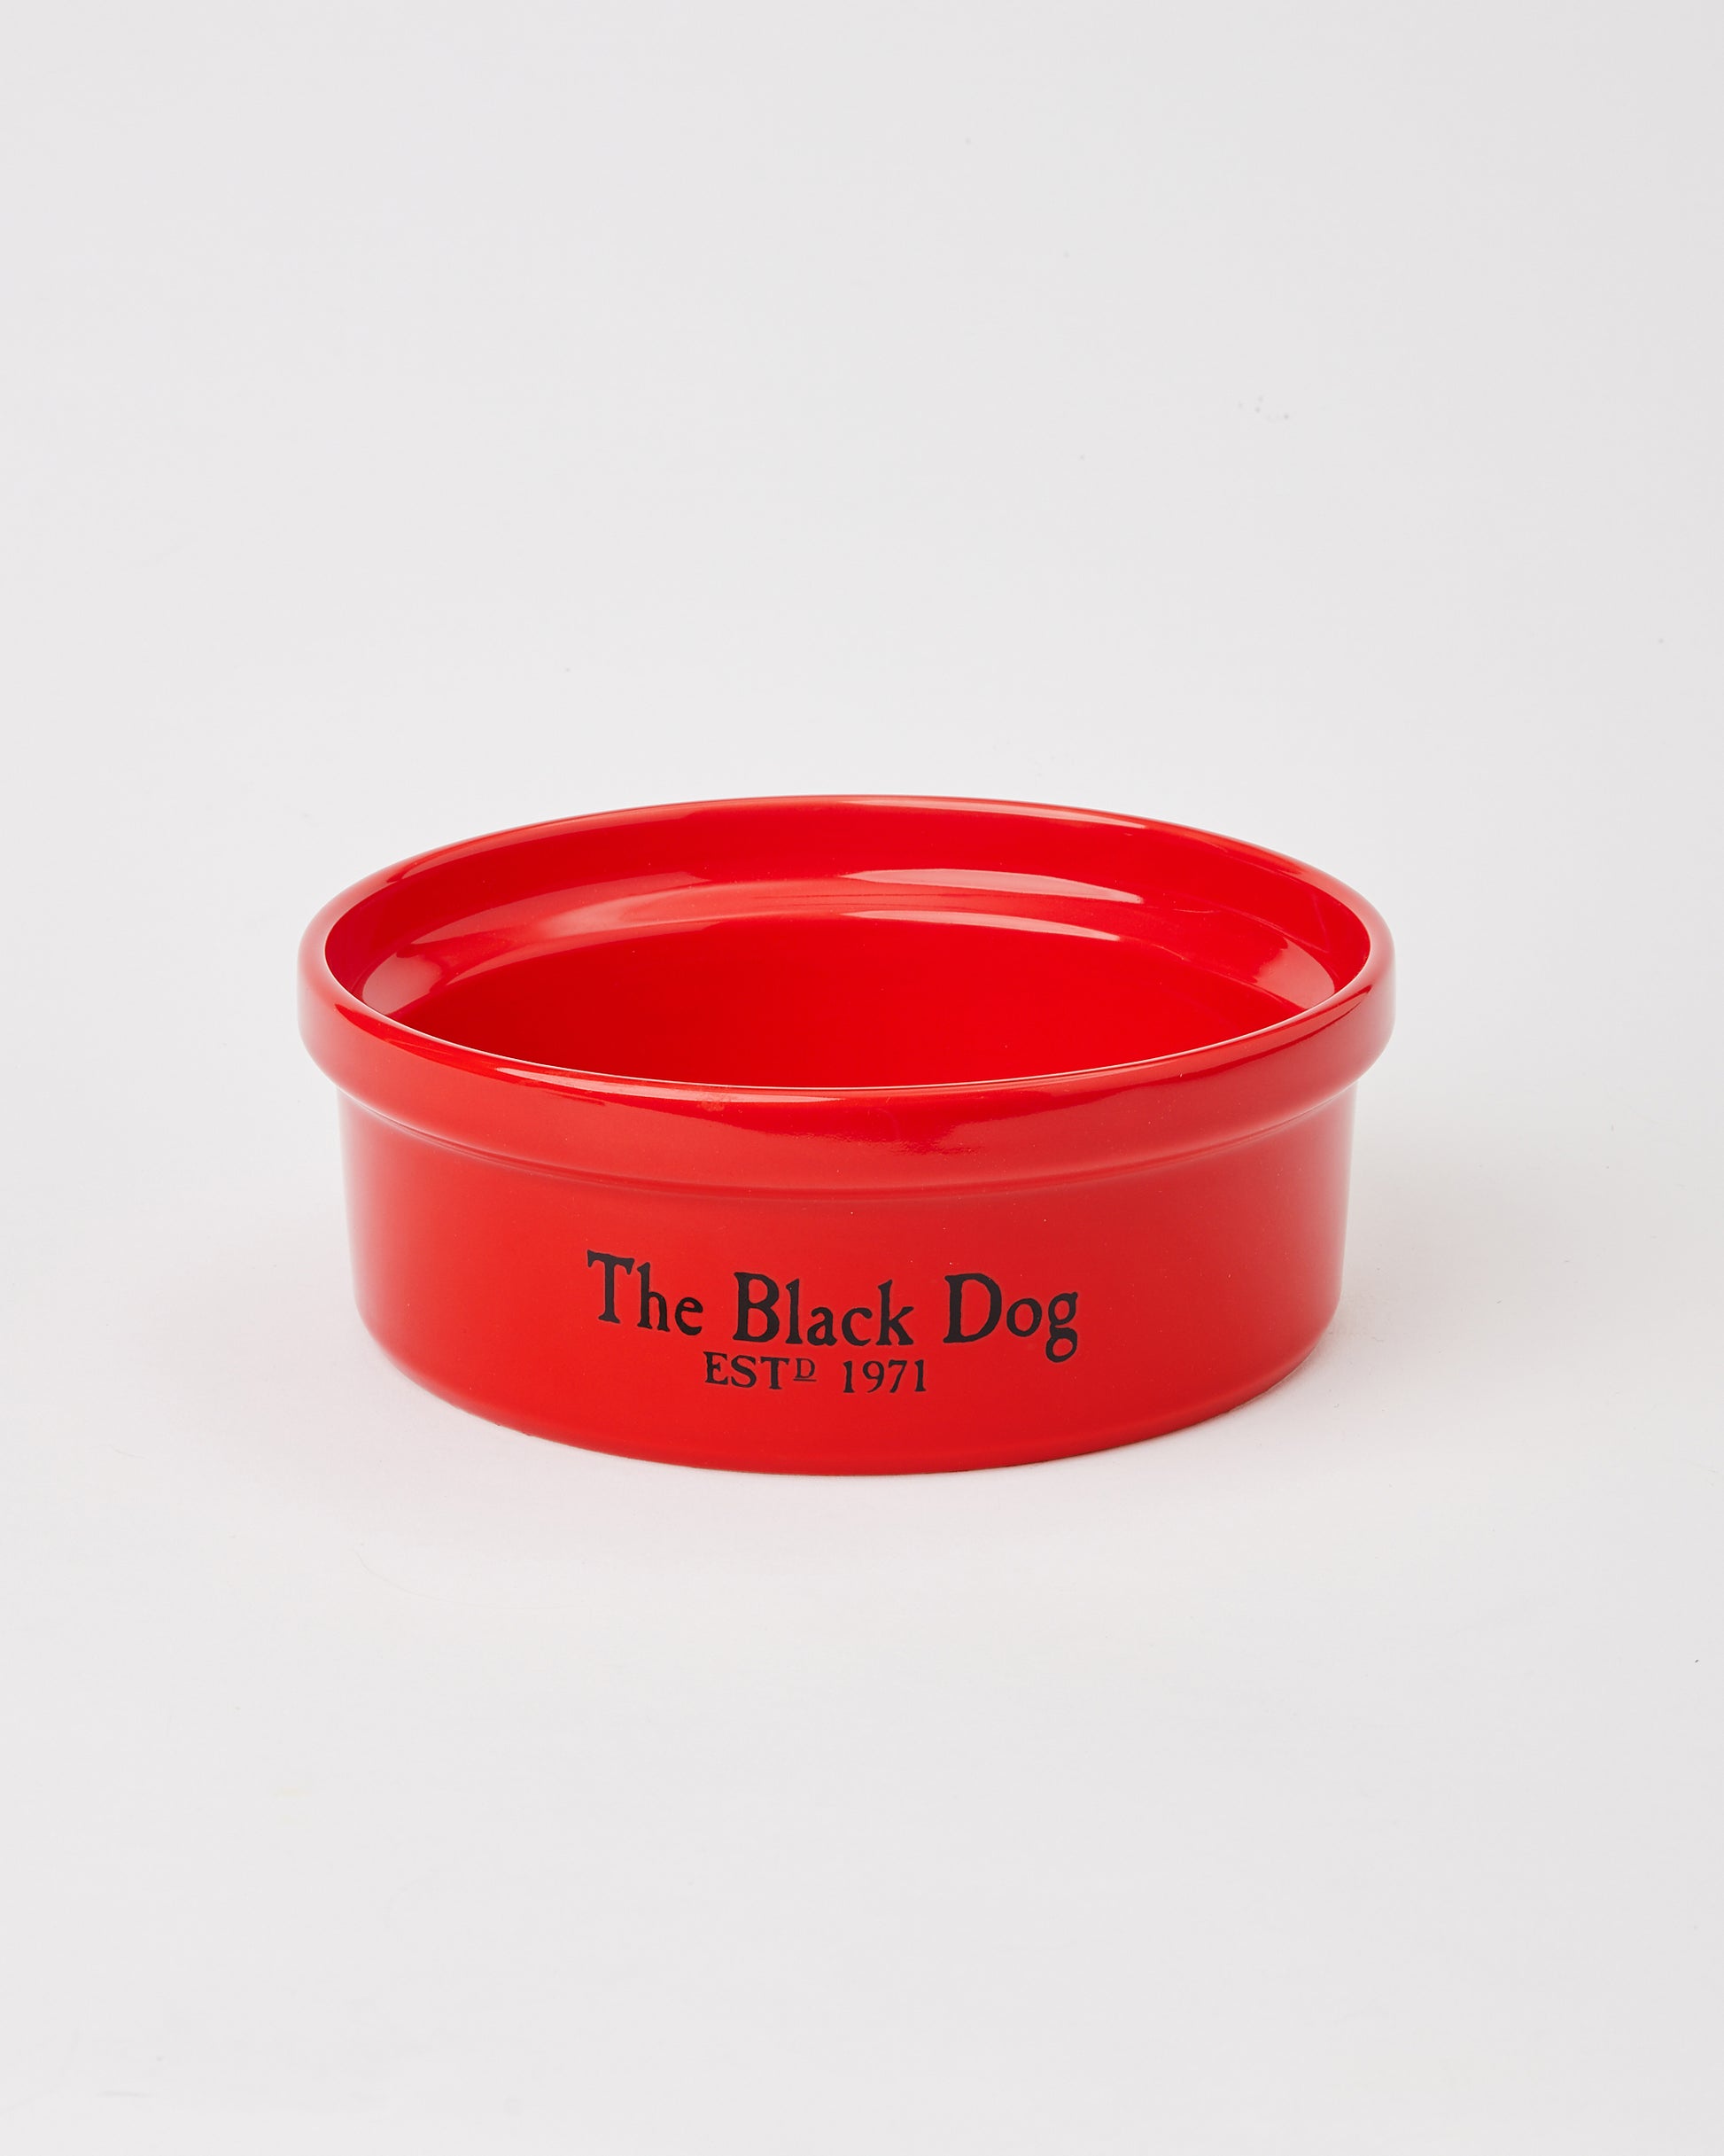 Black)Dog Bowls Large Diameter Waterproof Zipper Collapsible Dog Travel  Bowl